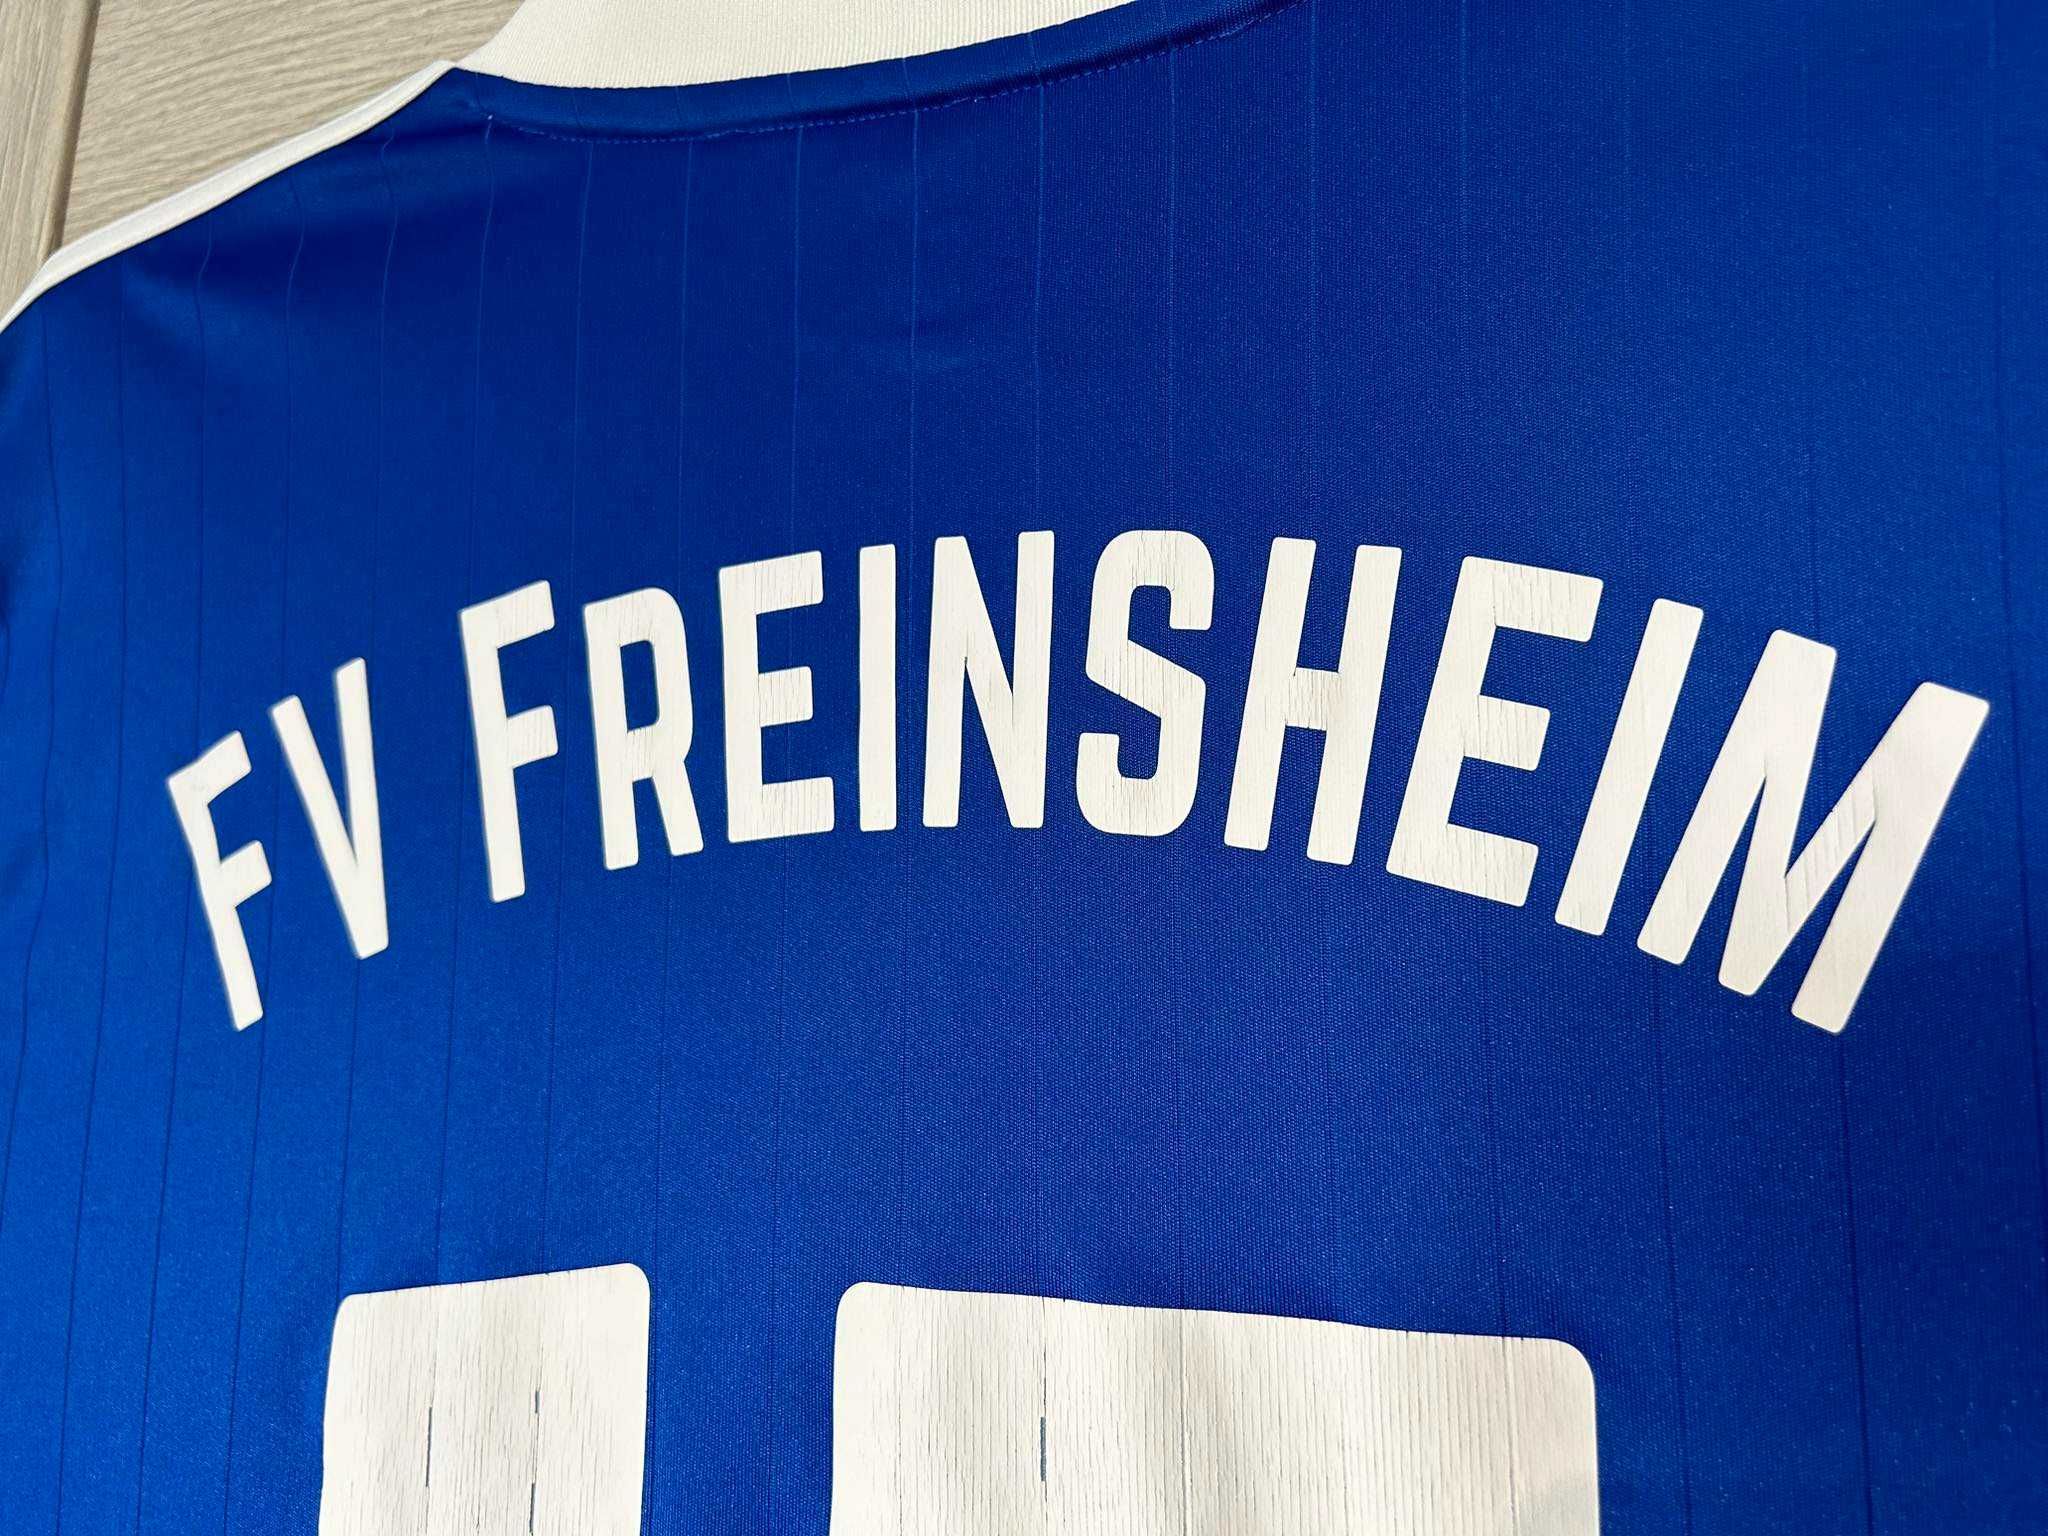 Koszulka Adidas - Fv Freinsheim, rozmiar L